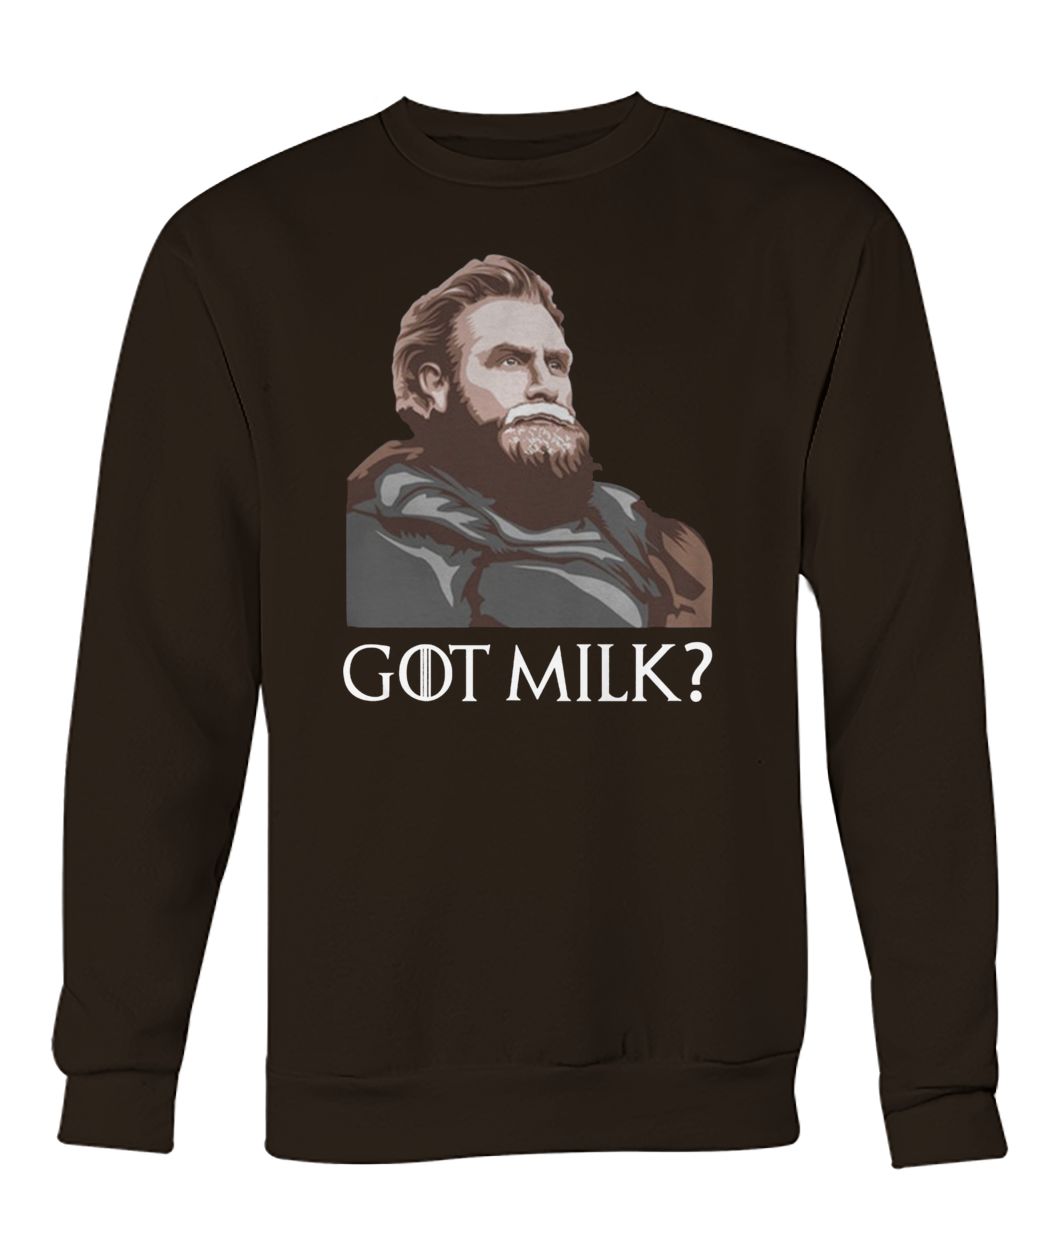 Game of thrones Jon snow got milk crew neck sweatshirt